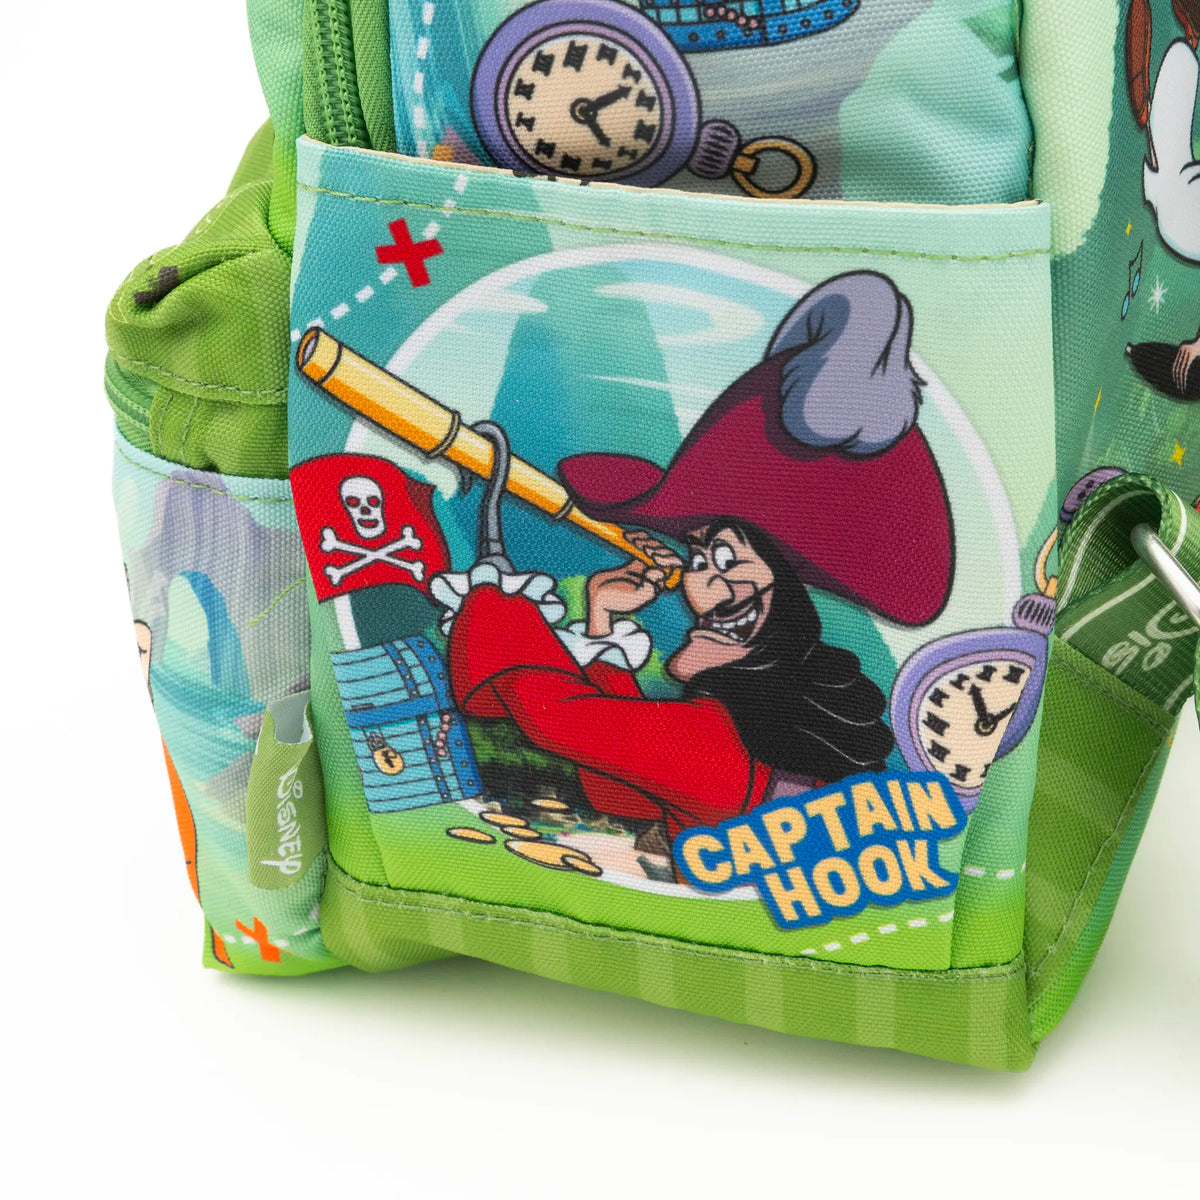 Disney Peter Pan Park Day Nylon Mini Backpack